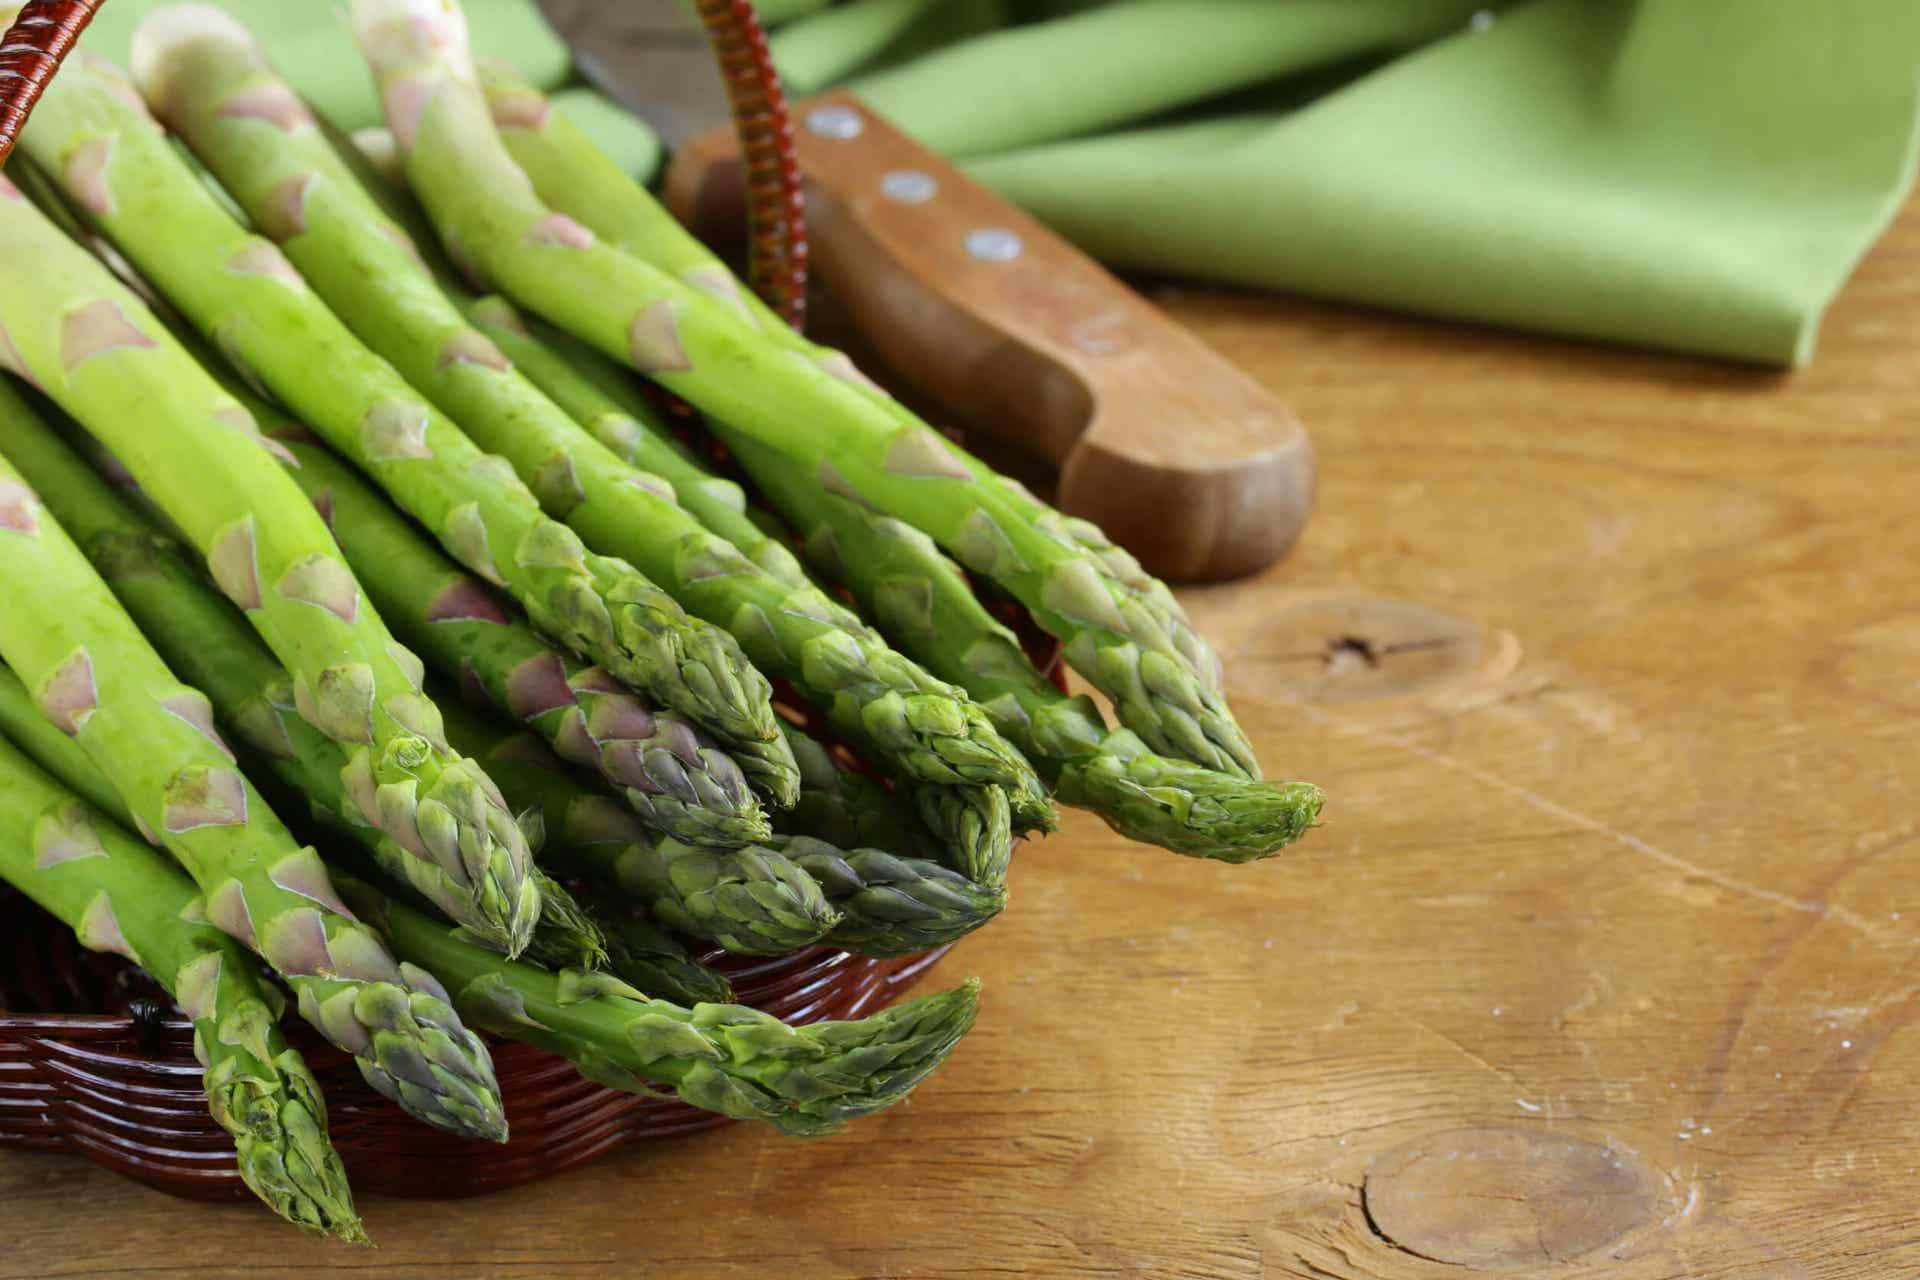 Some asparagus.